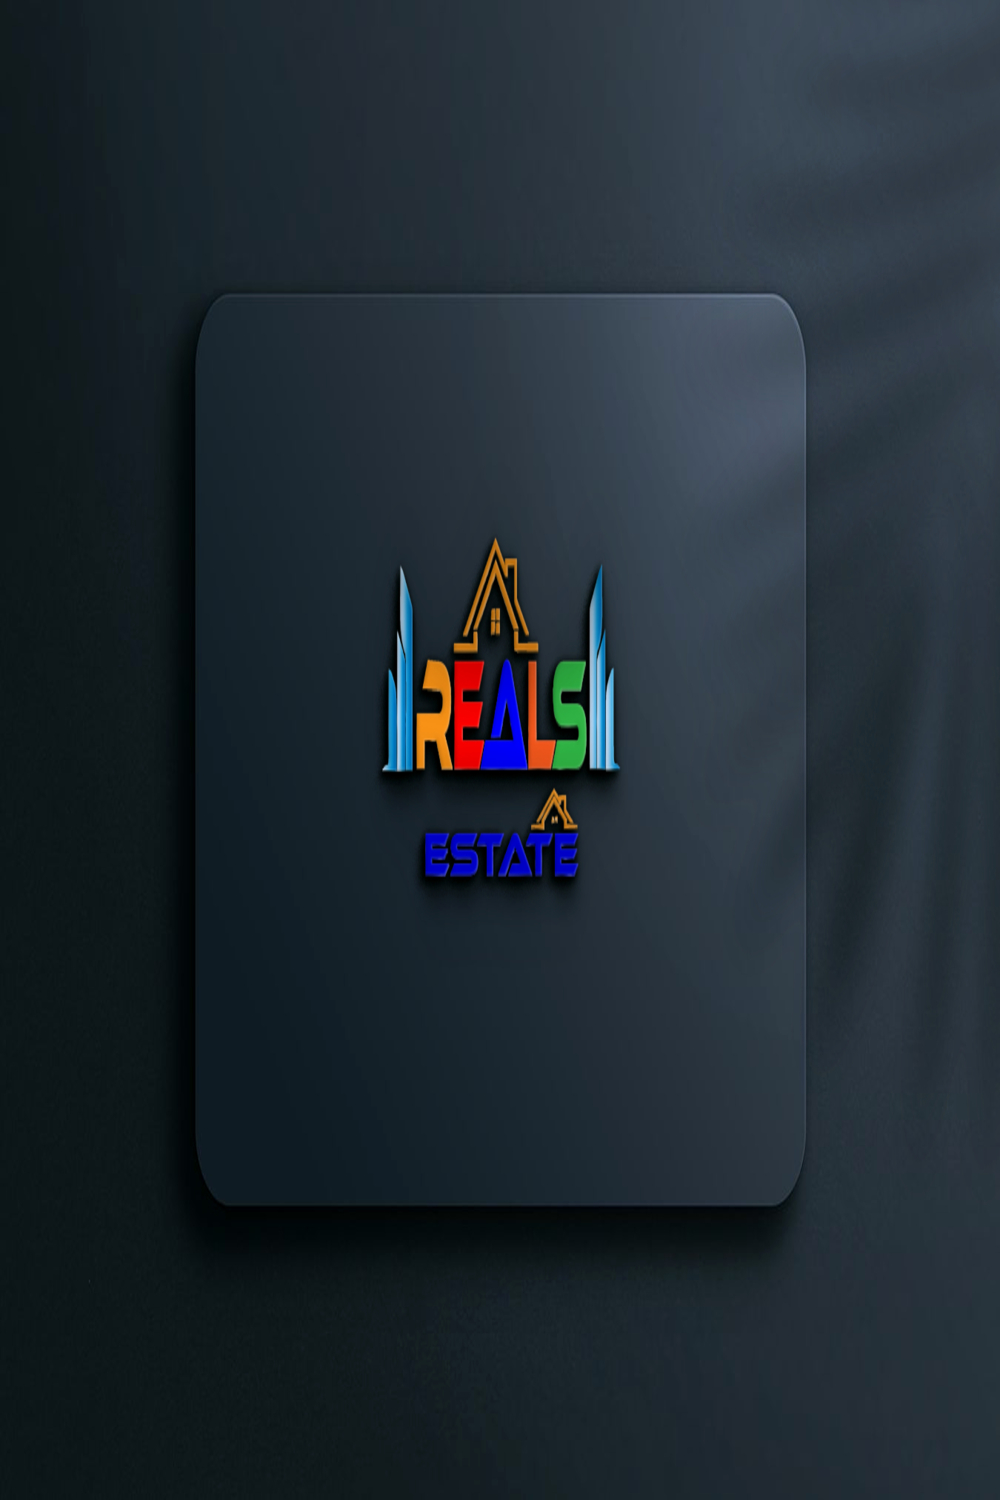 Reals Estate - 3 D Logo Design Template Creative in adobe illustrator pinterest preview image.